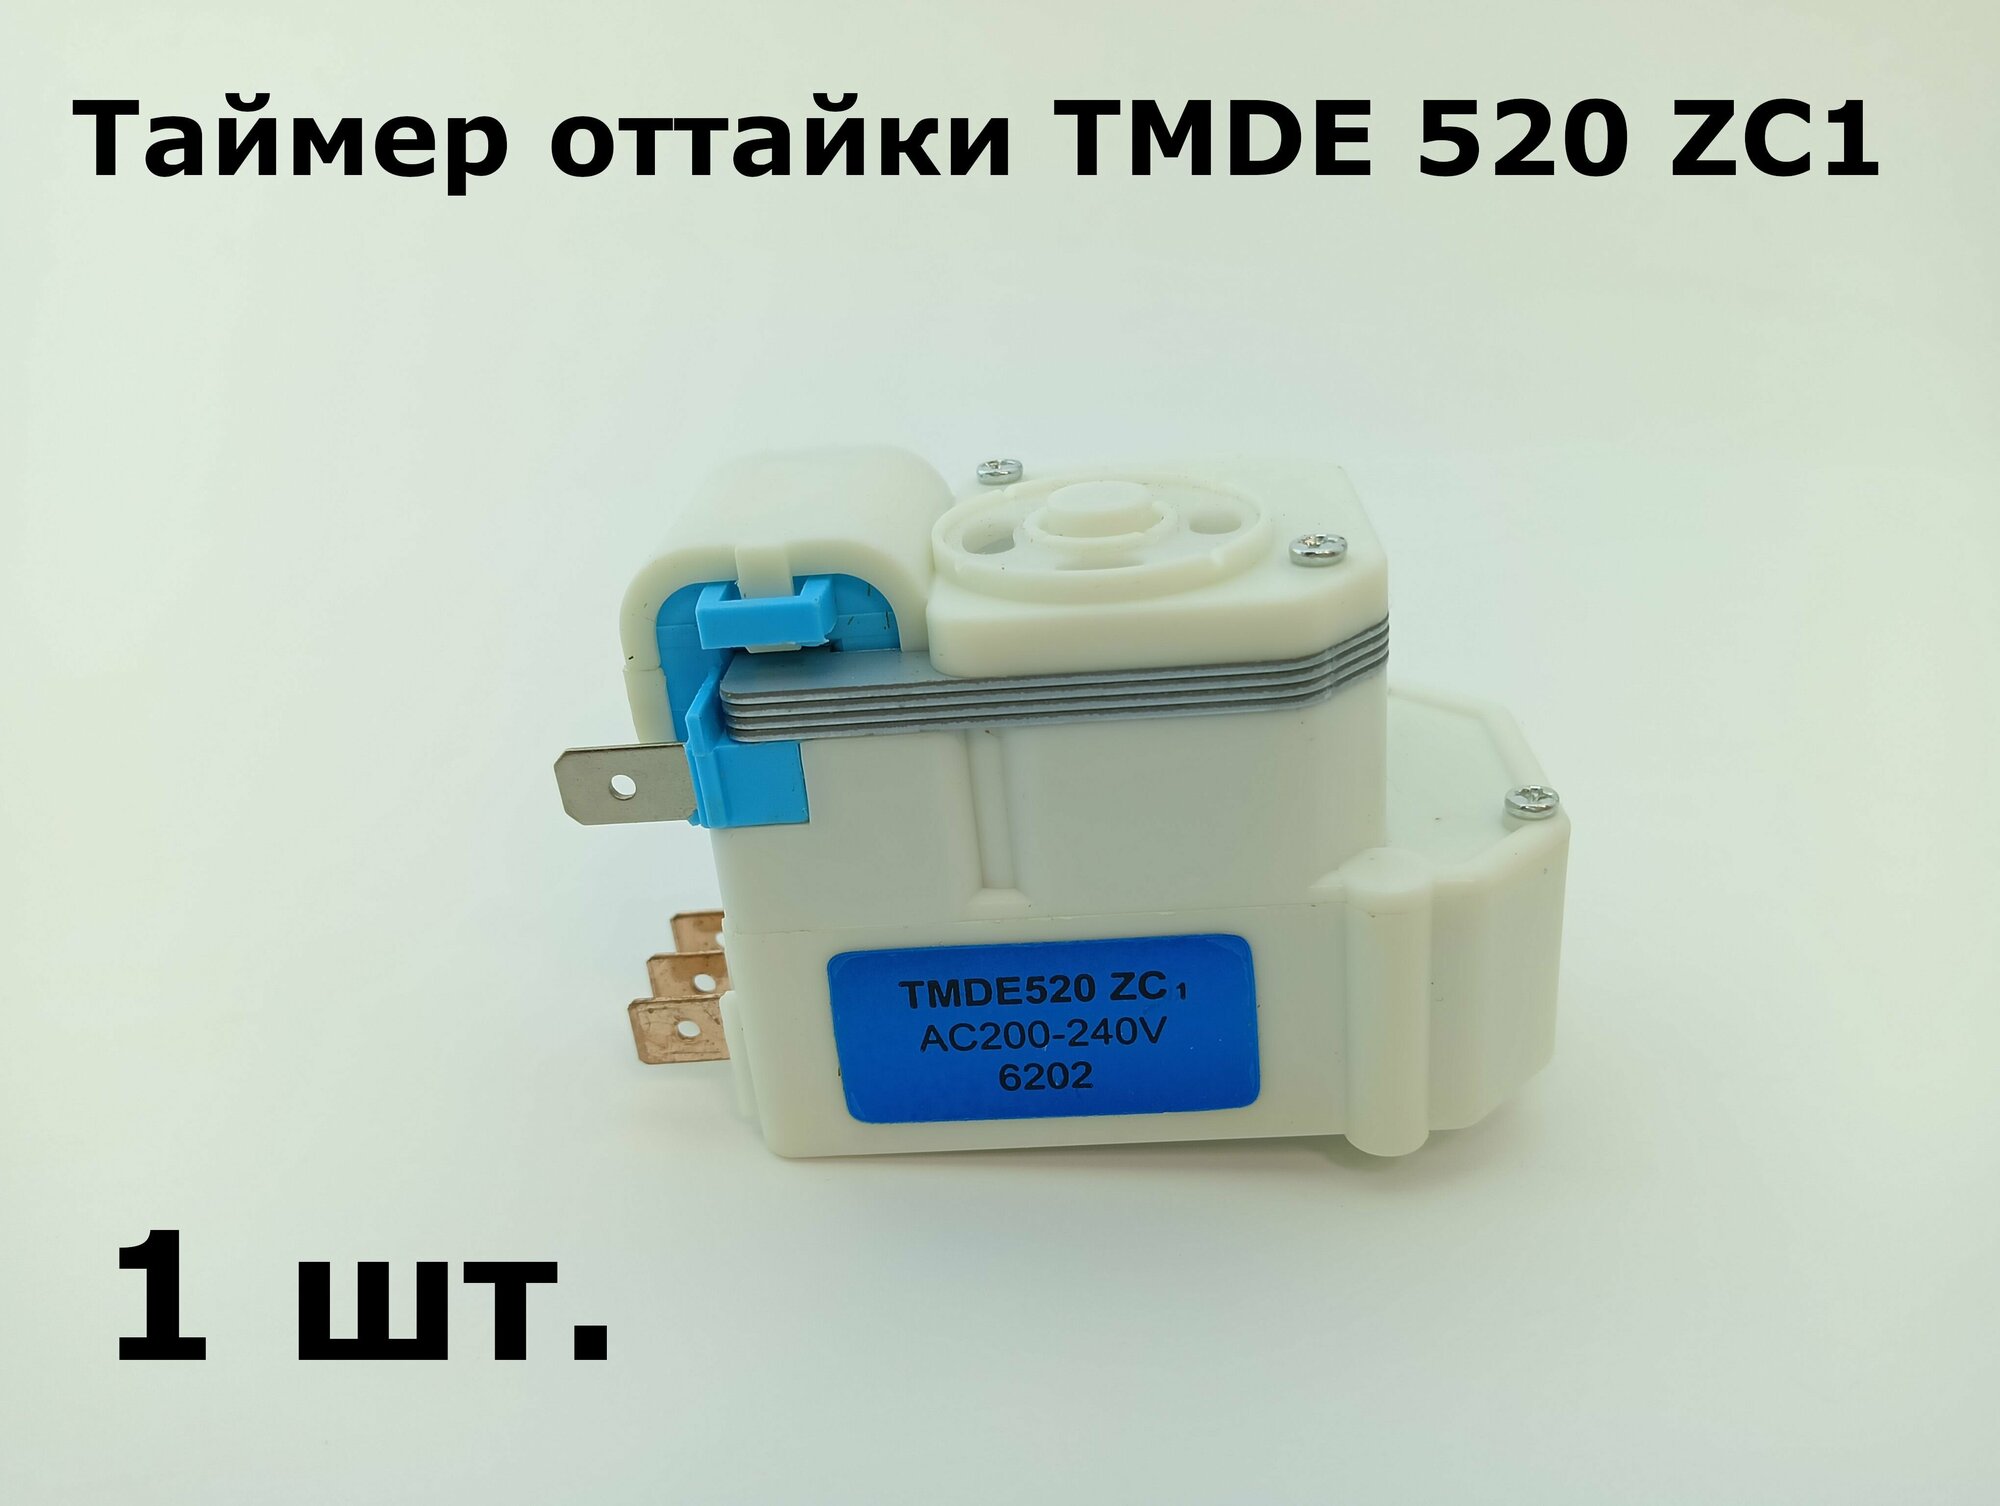 Таймер оттайки холодильника No Frost TMDE 520 ZC1 - 1 шт.